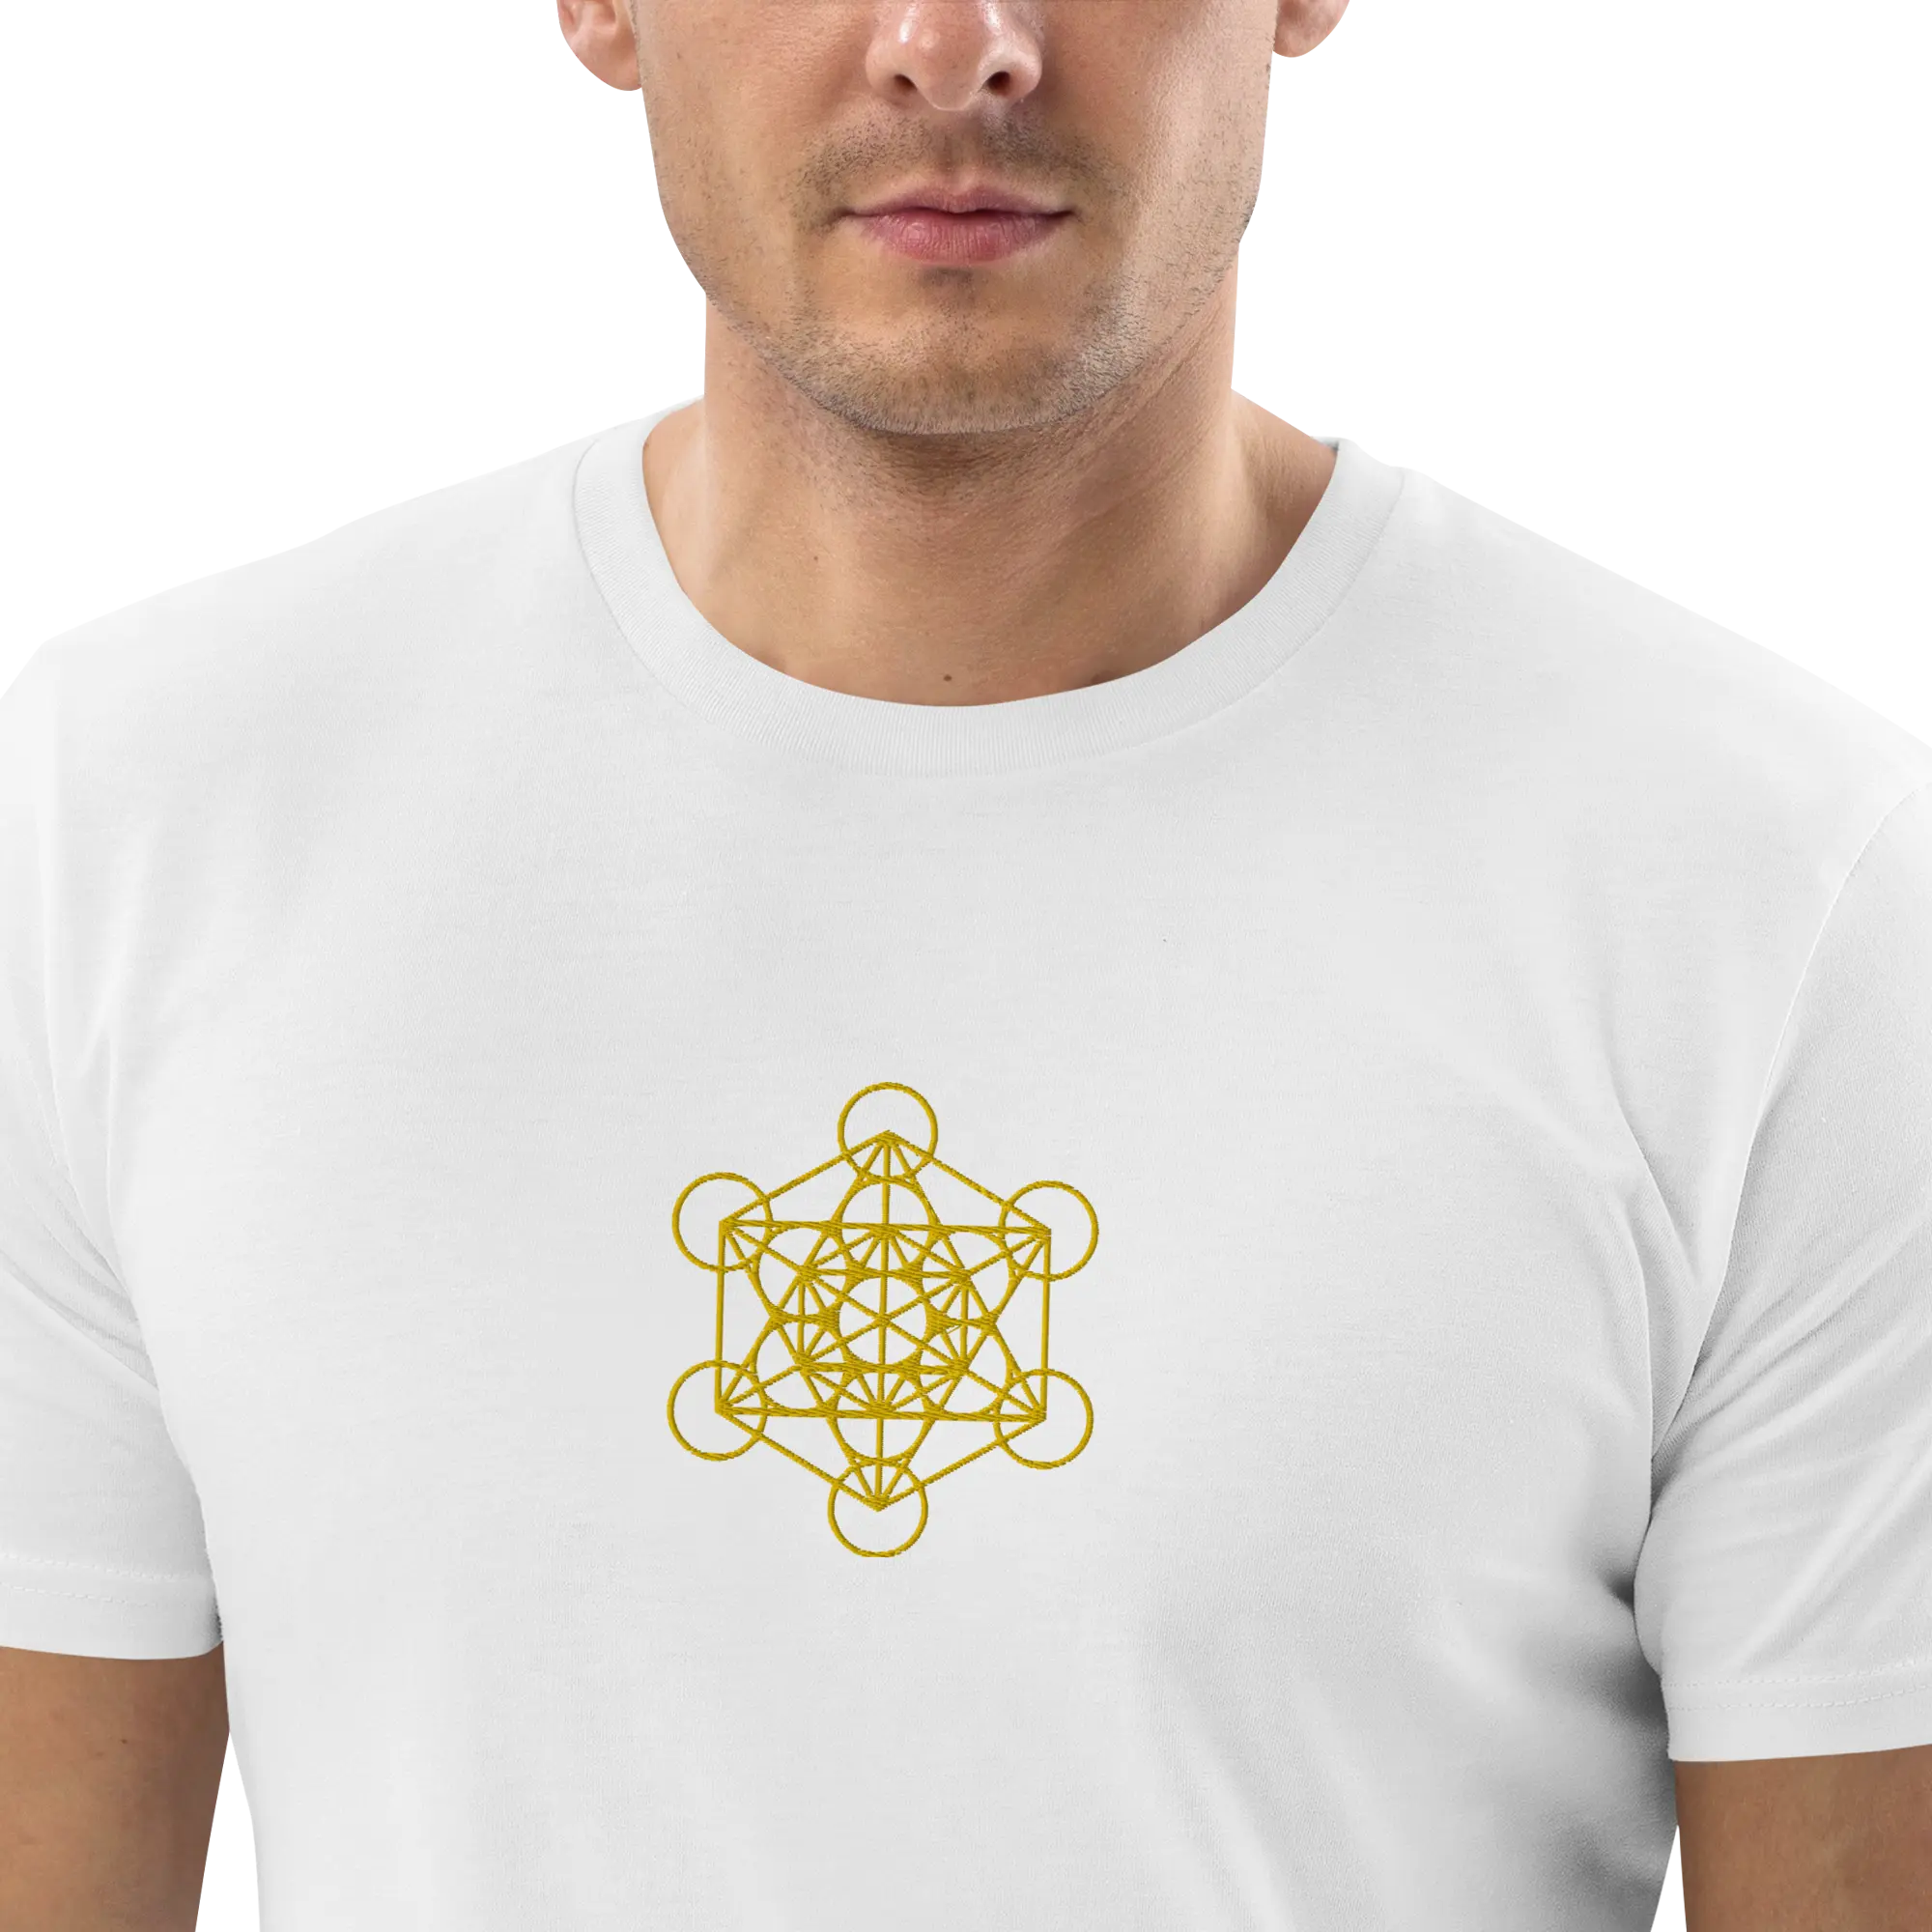 100% Organic Cotton ⋅ Gold Metatron's Cube + Fruit of Life Embroidery ⋅ Men's T-Shirt ⋅ White